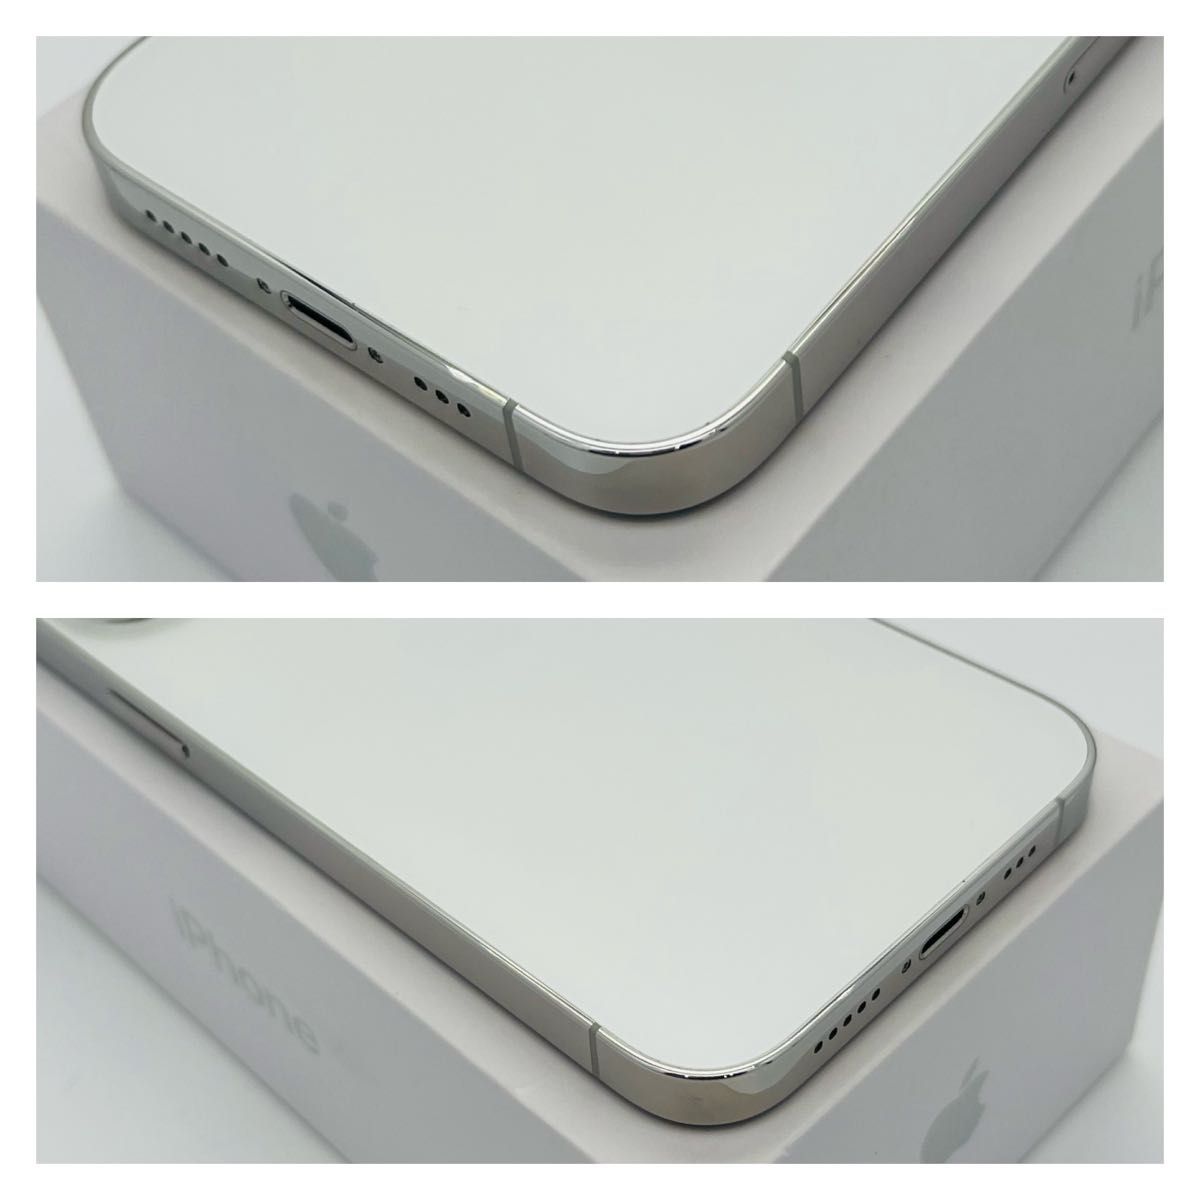 S 新品電池　iPhone 13 Pro シルバー 256 GB SIMフリー